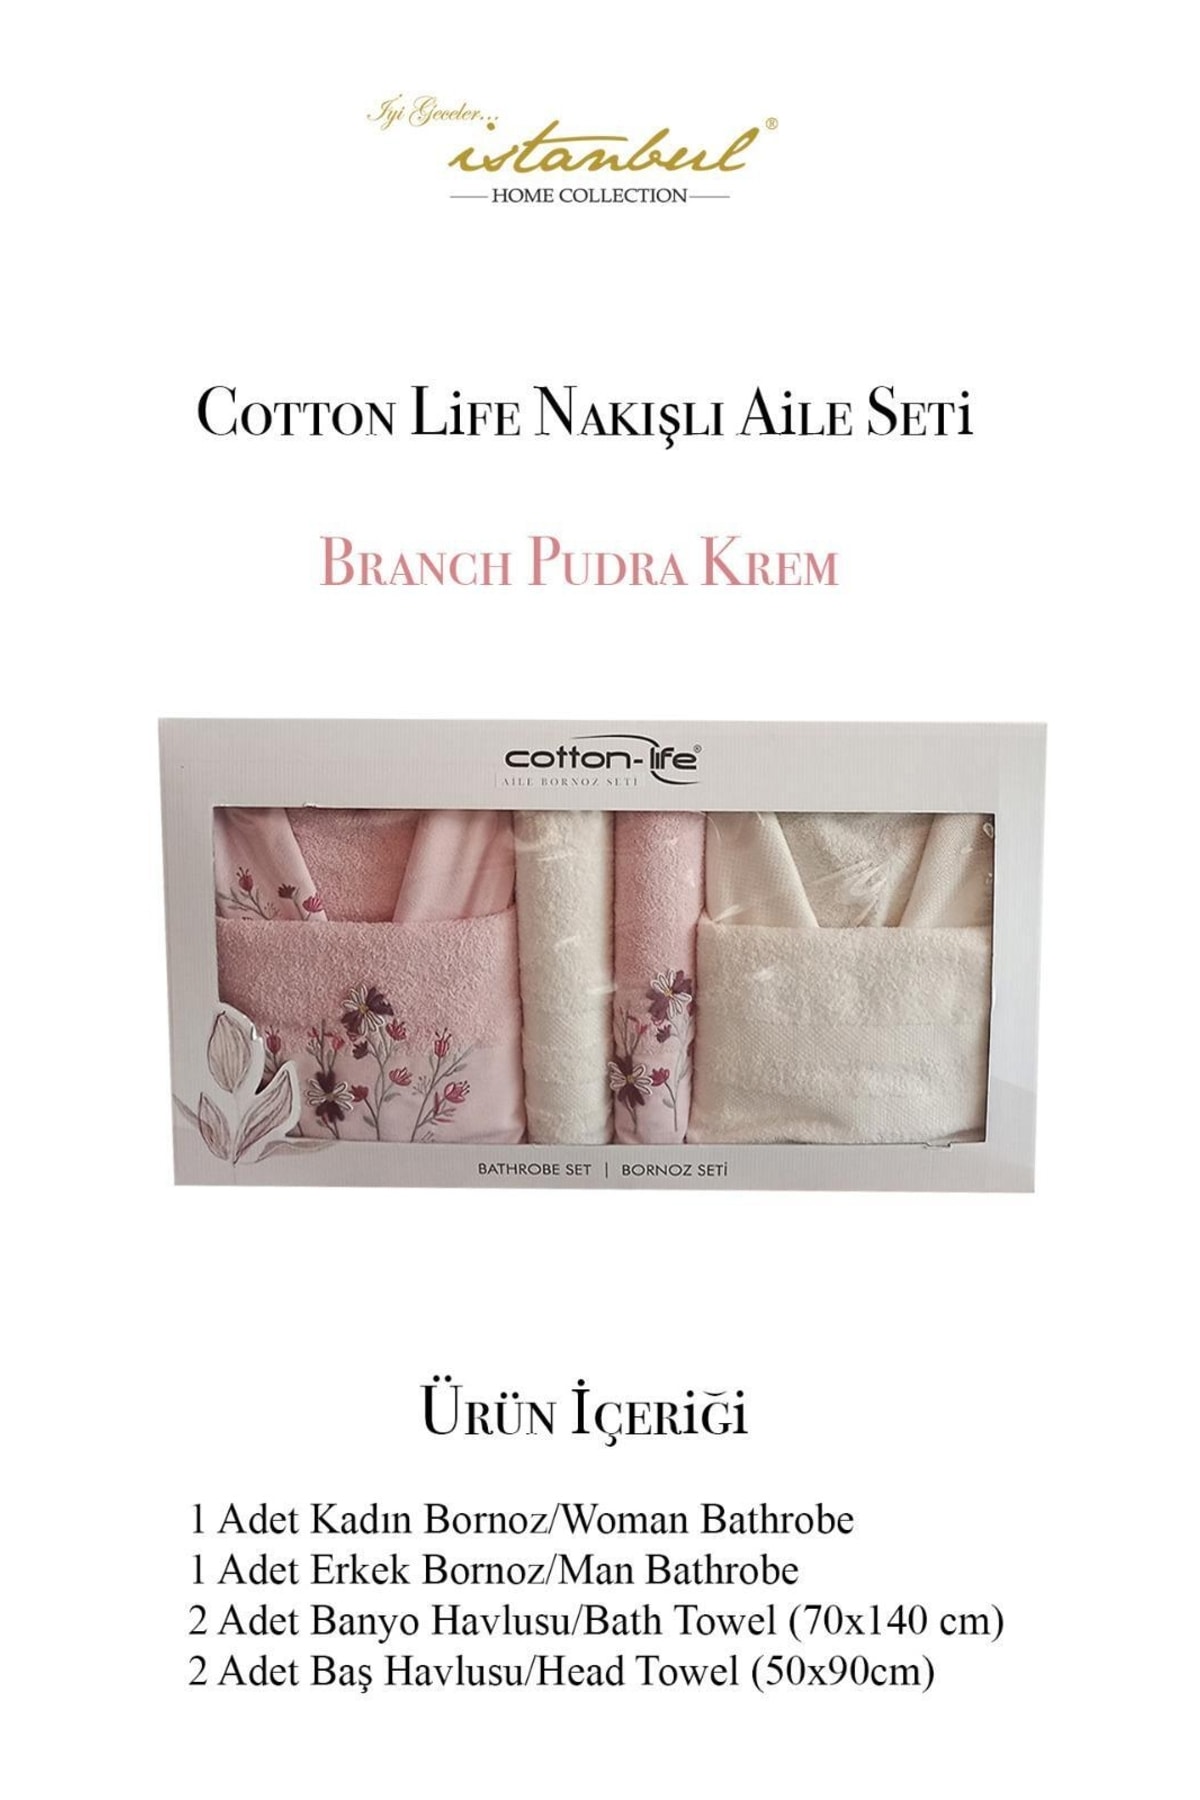 İyi Geceler İstanbul Cotton-life Aile Bornoz Seti Branch Pudra-krem